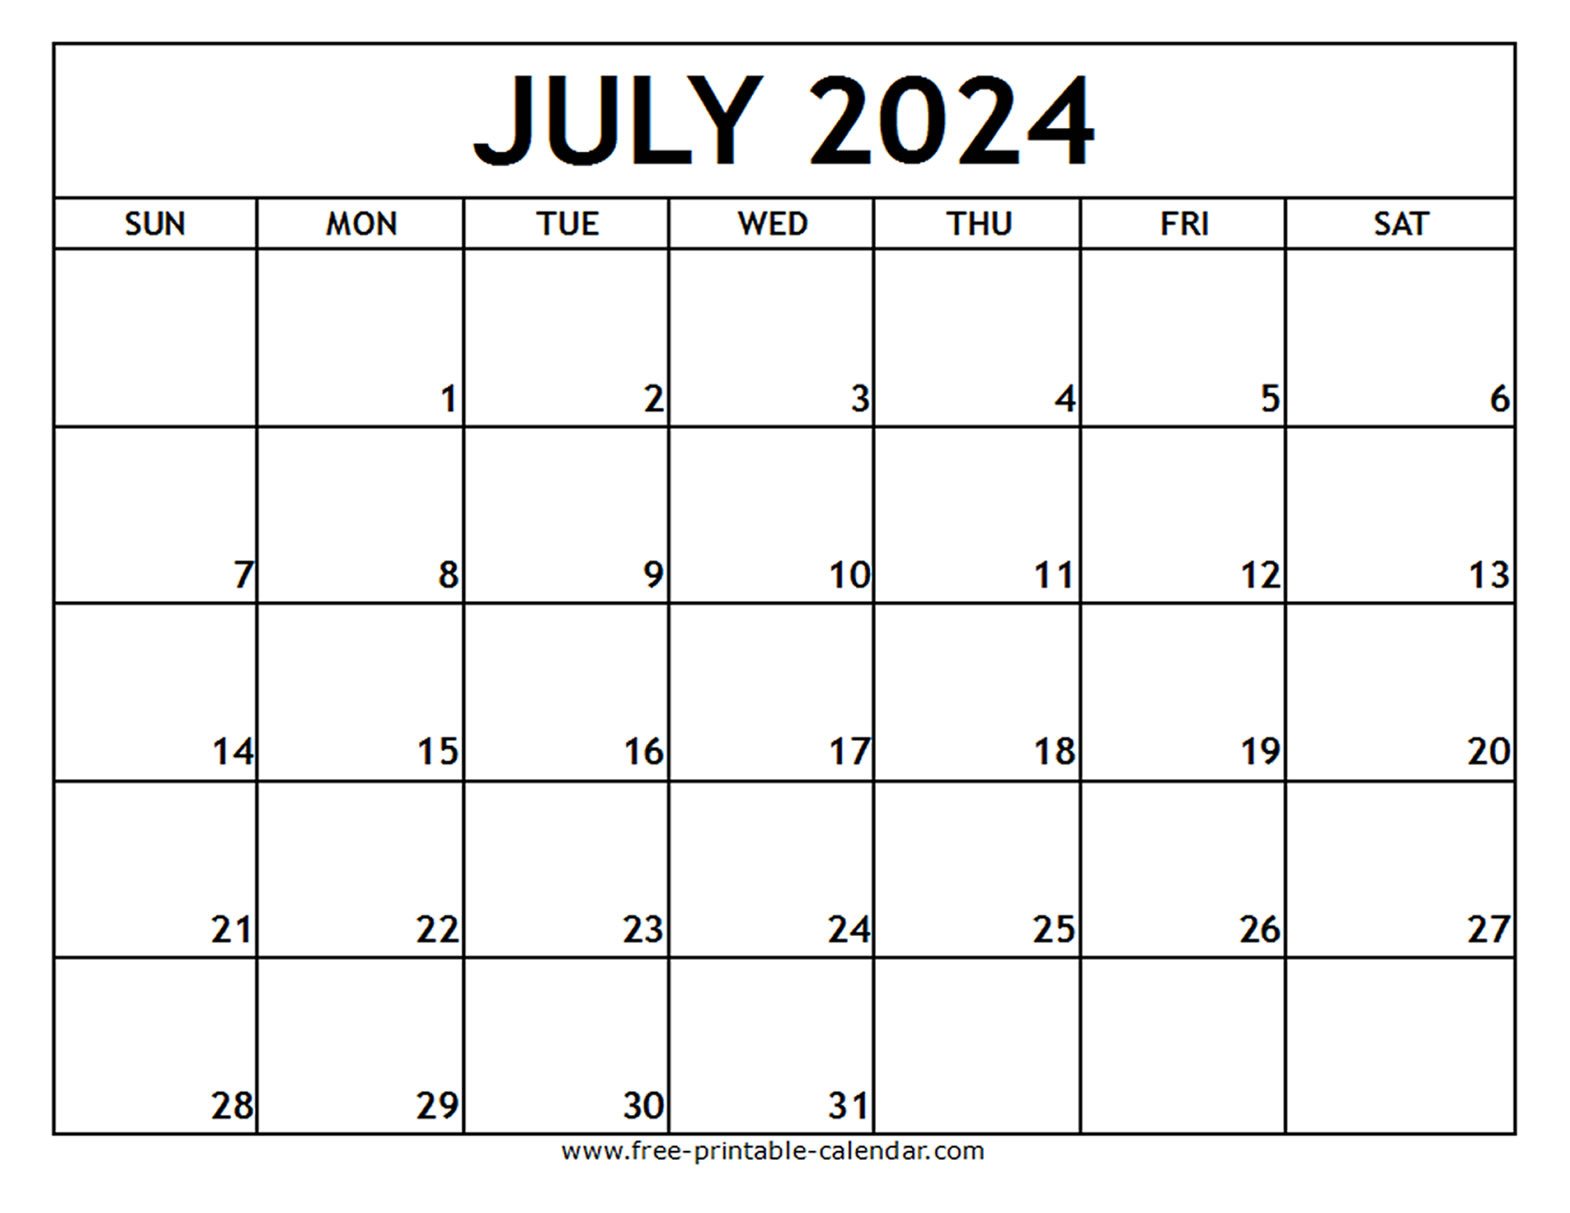 July 2024 Printable Calendar - Free-Printable-Calendar | July Printable Calendar 2024 Free